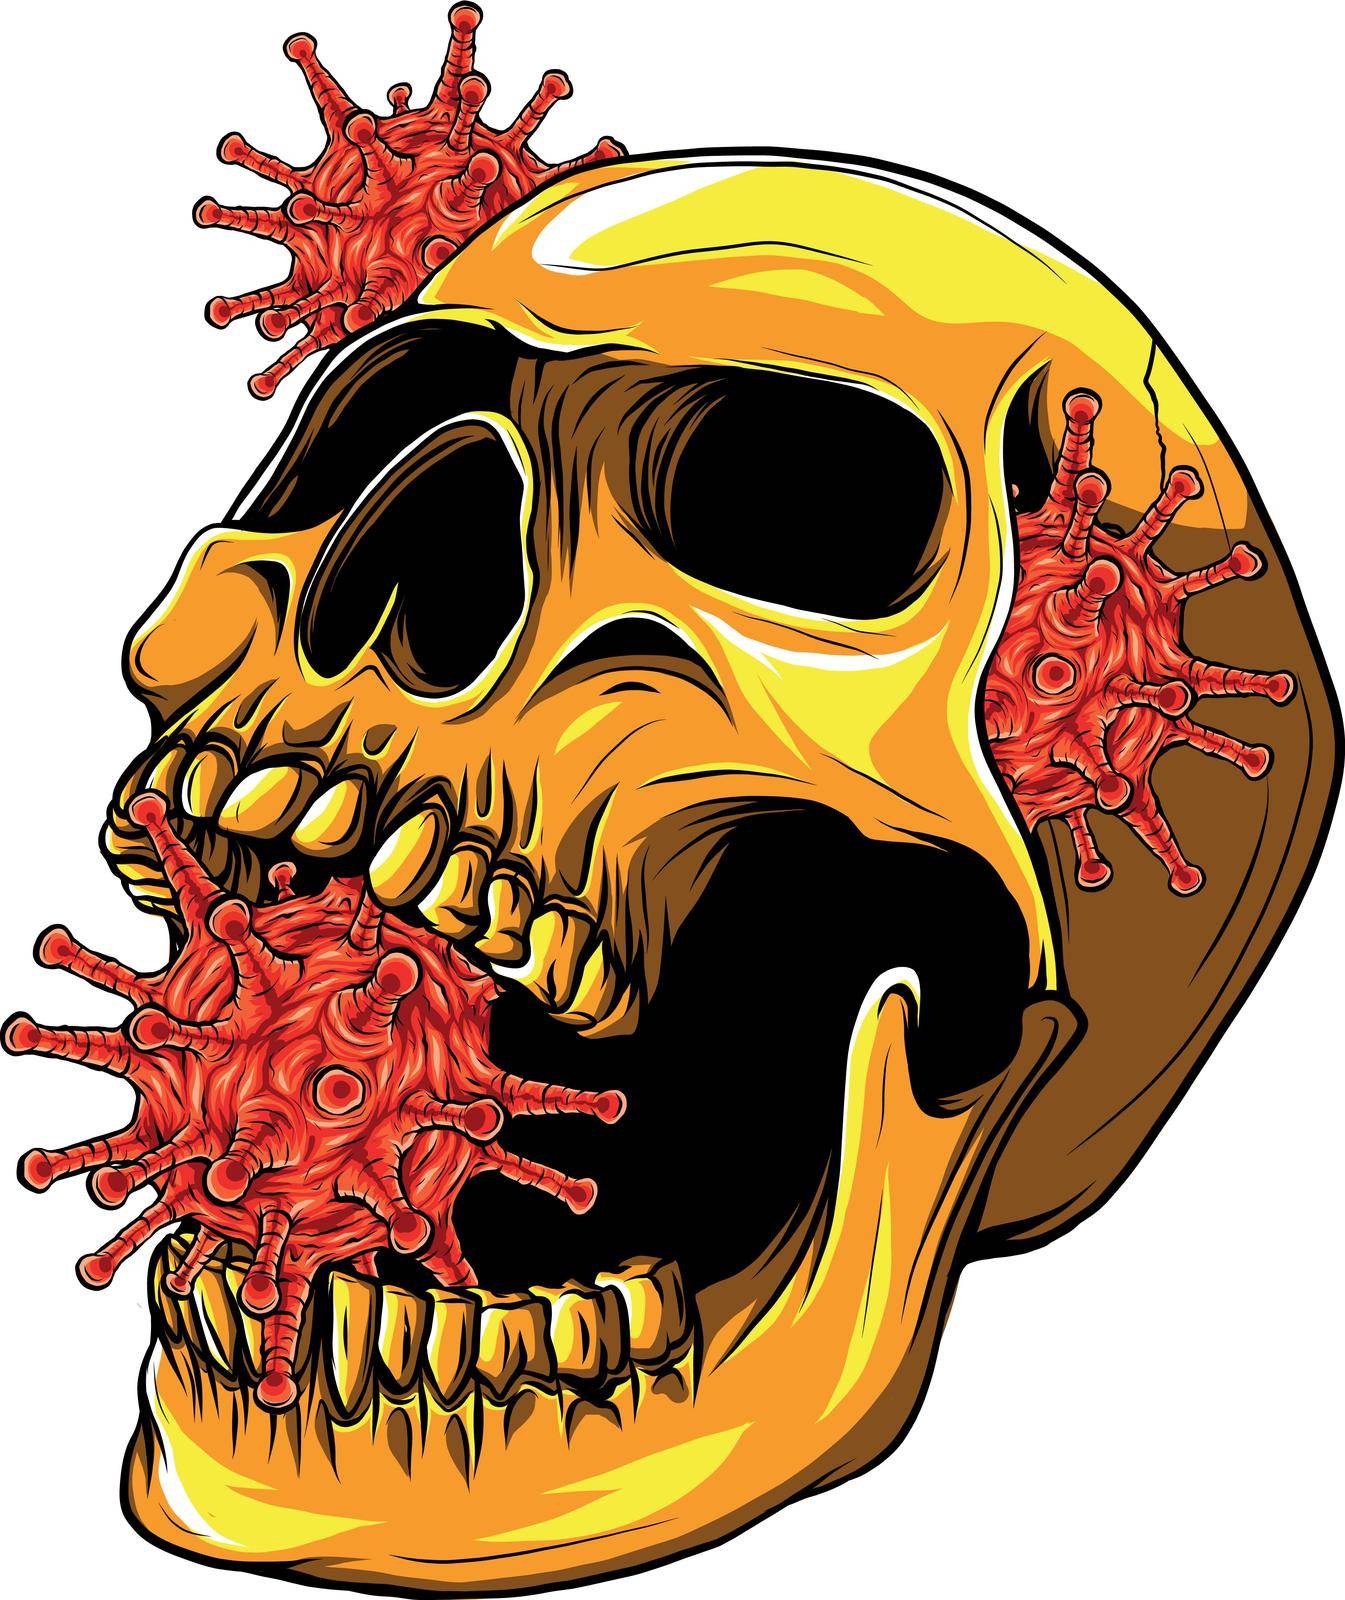 virus around human skull vector illustration design by dean